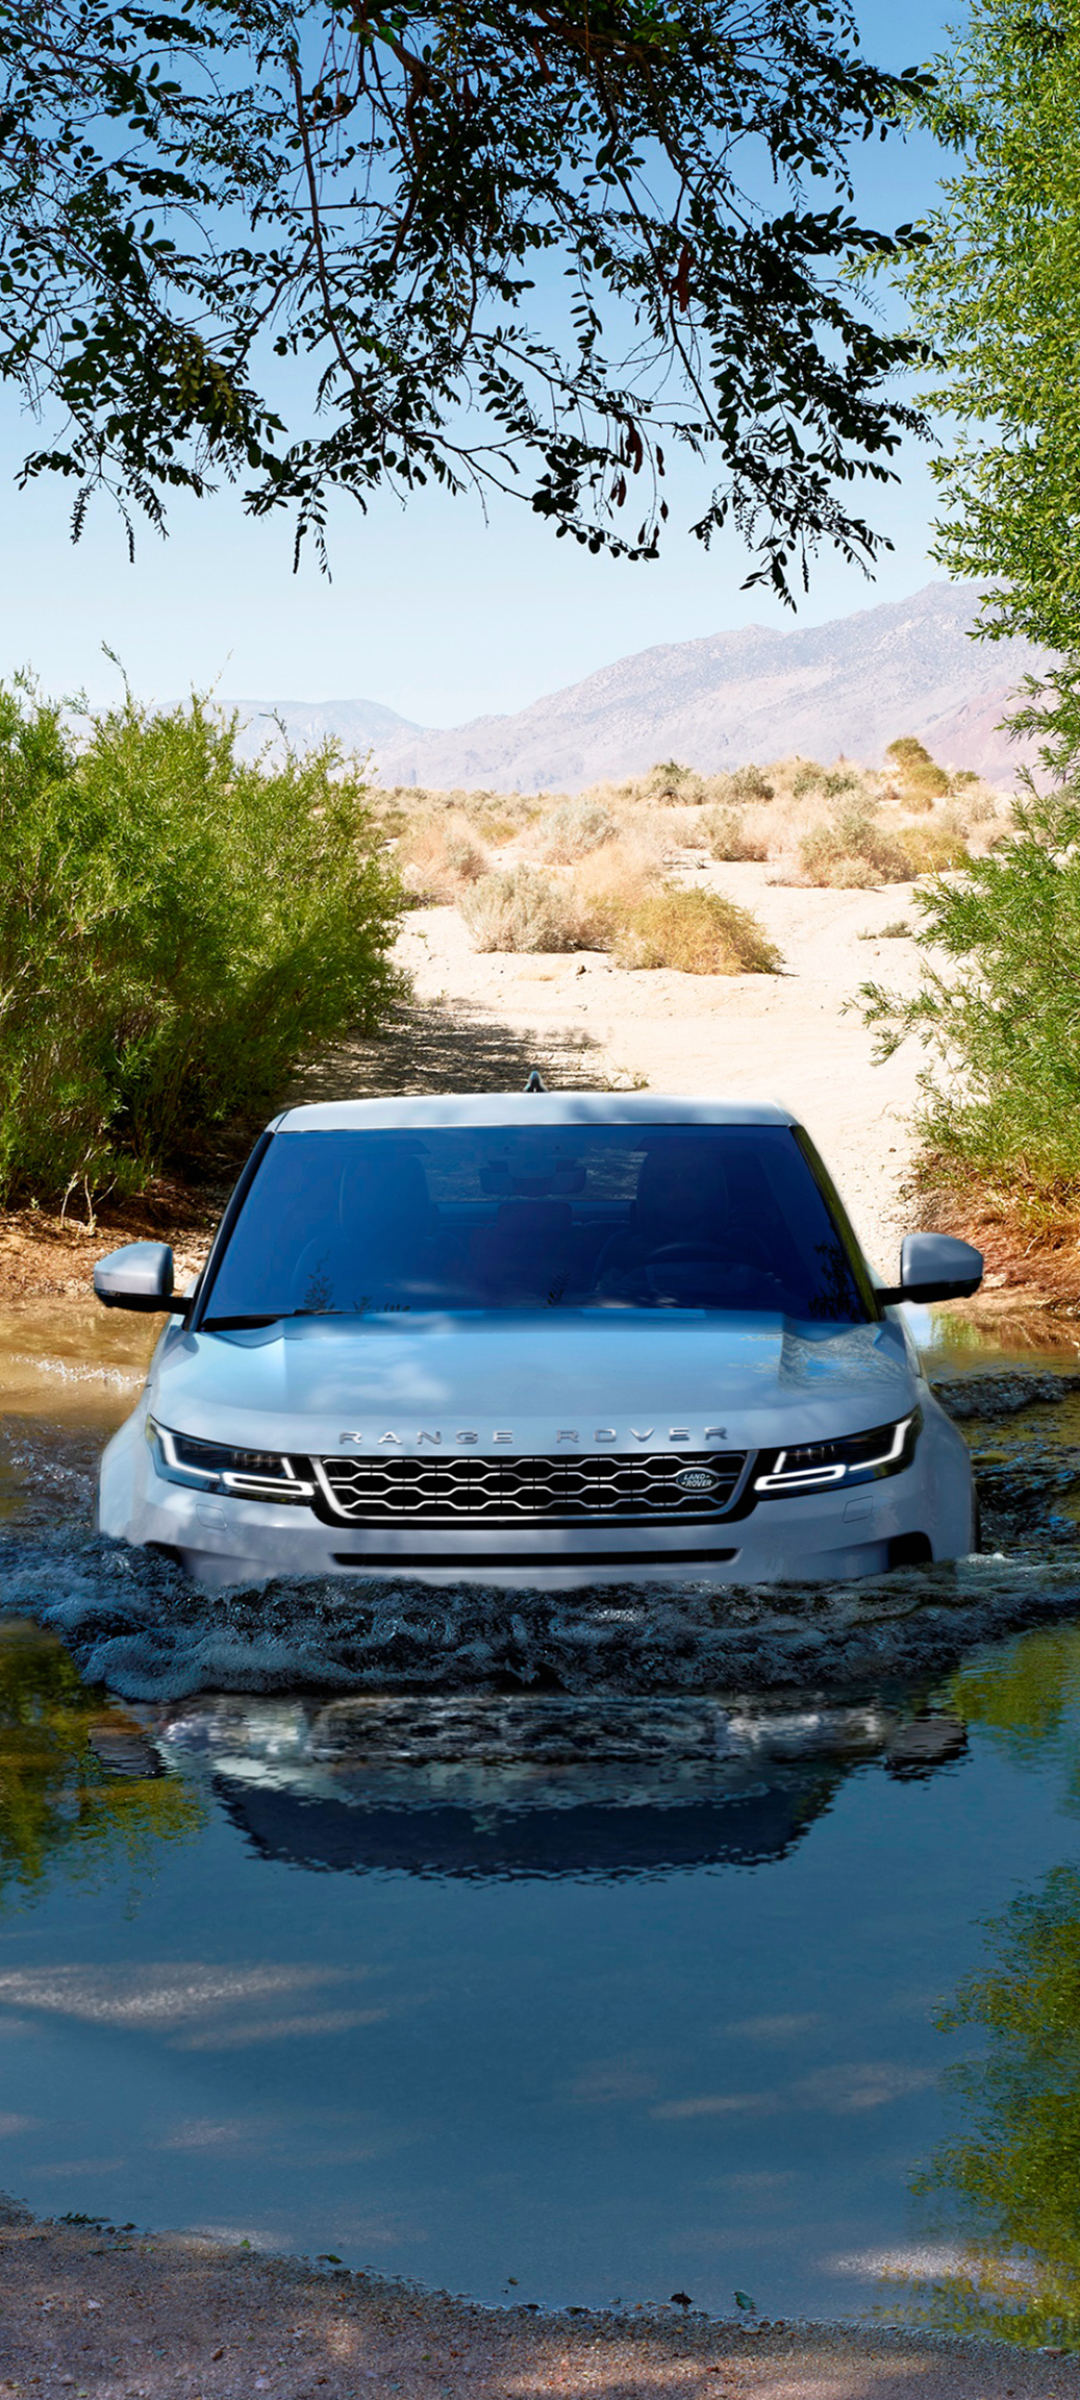 Baixar papel de parede para celular de Range Rover, Veículos, Evoque Range Rover gratuito.